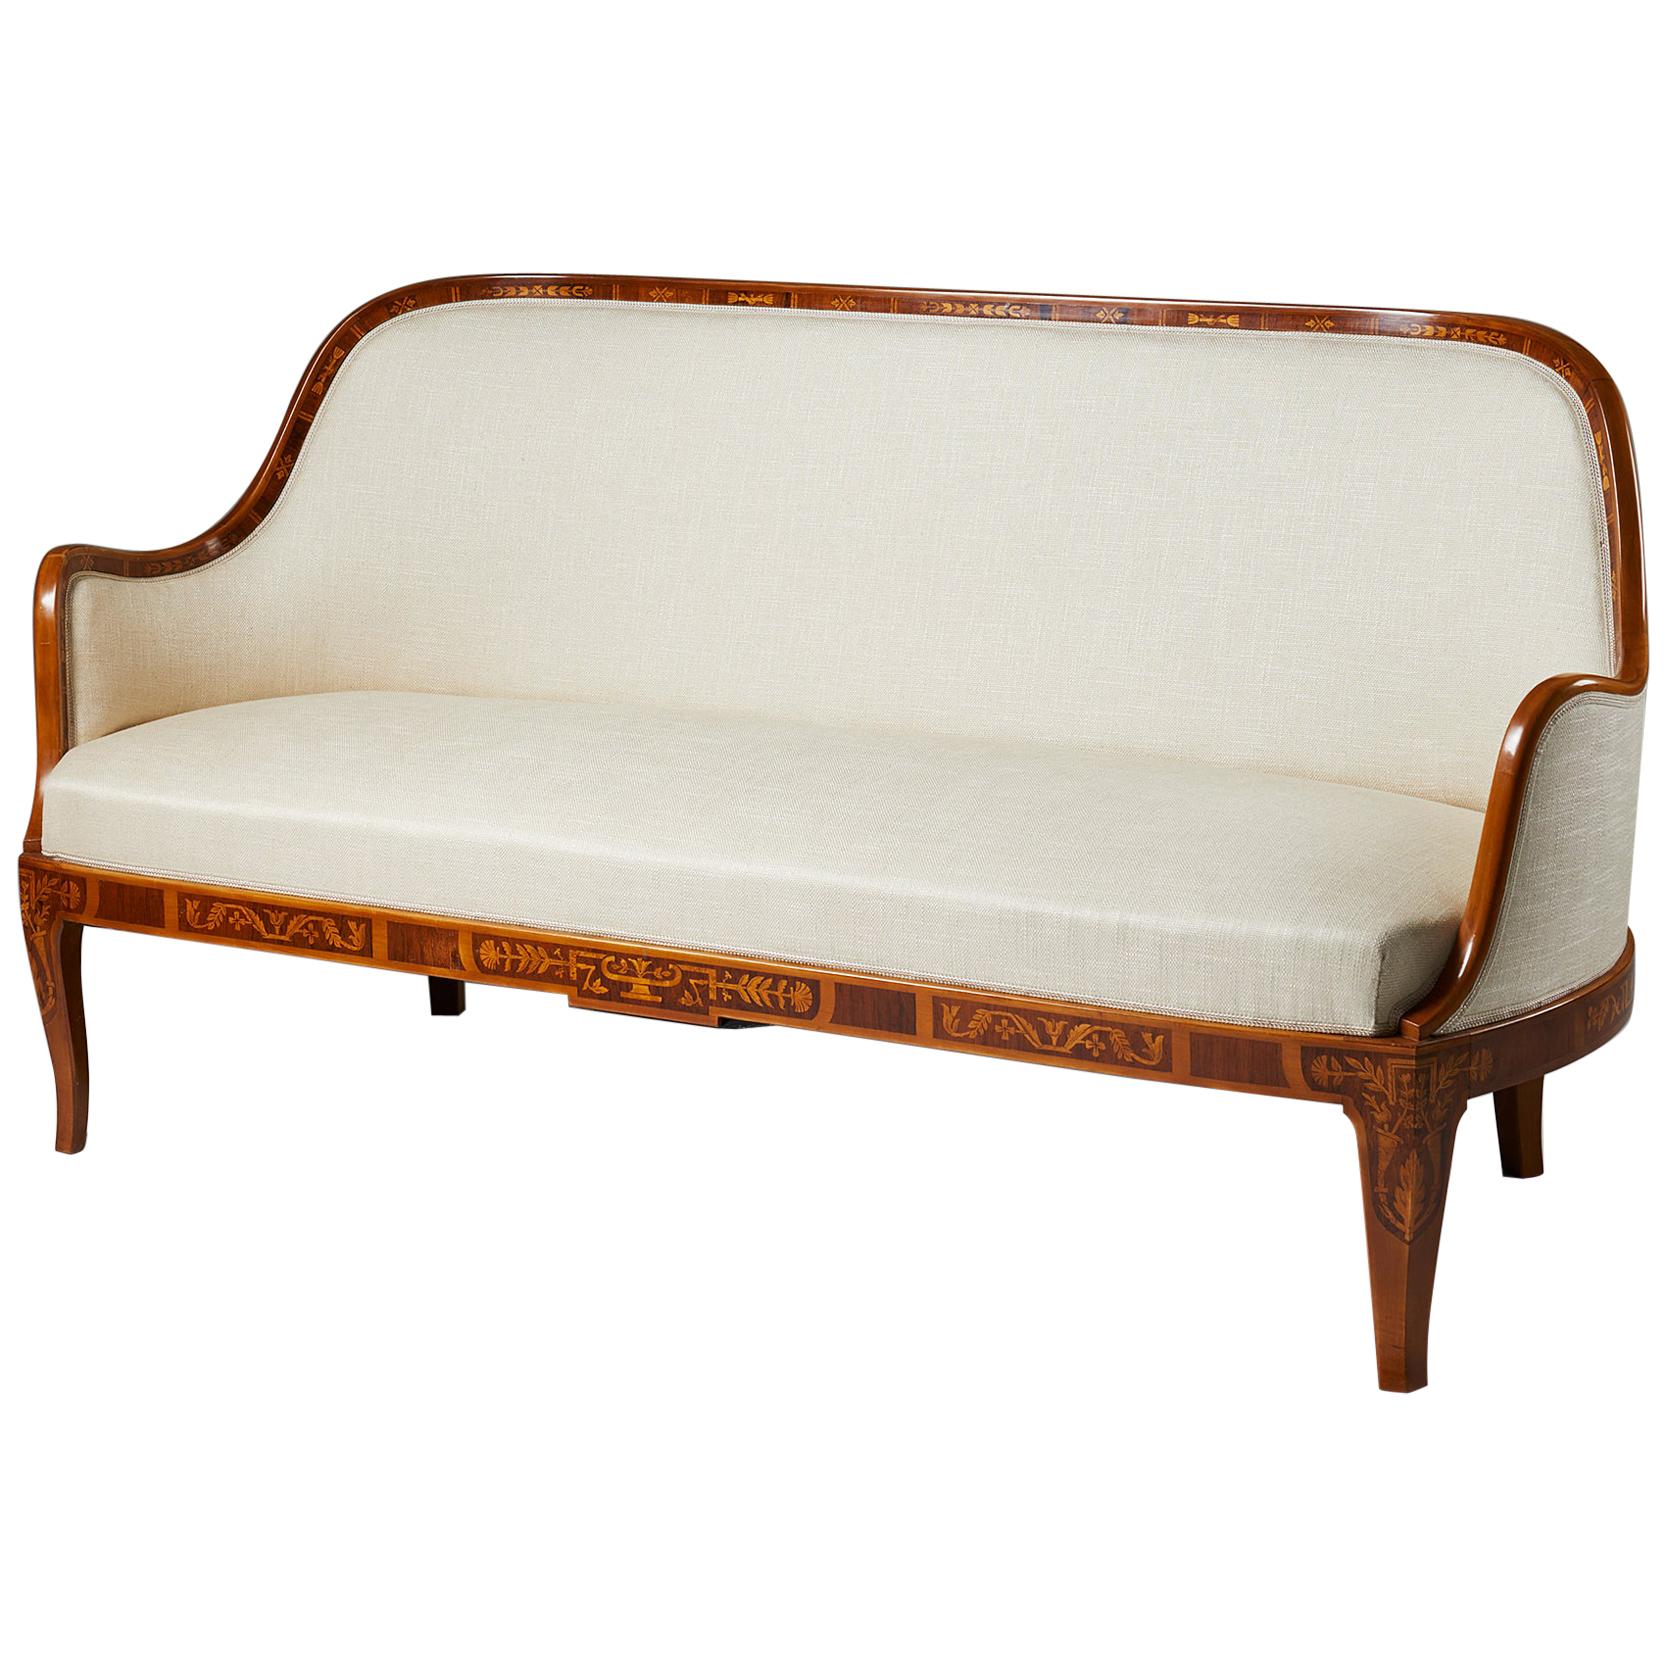 Swedish Grace Sofa Designed by Carl Malmsten, Mahogany Frame, Sweden, 1929